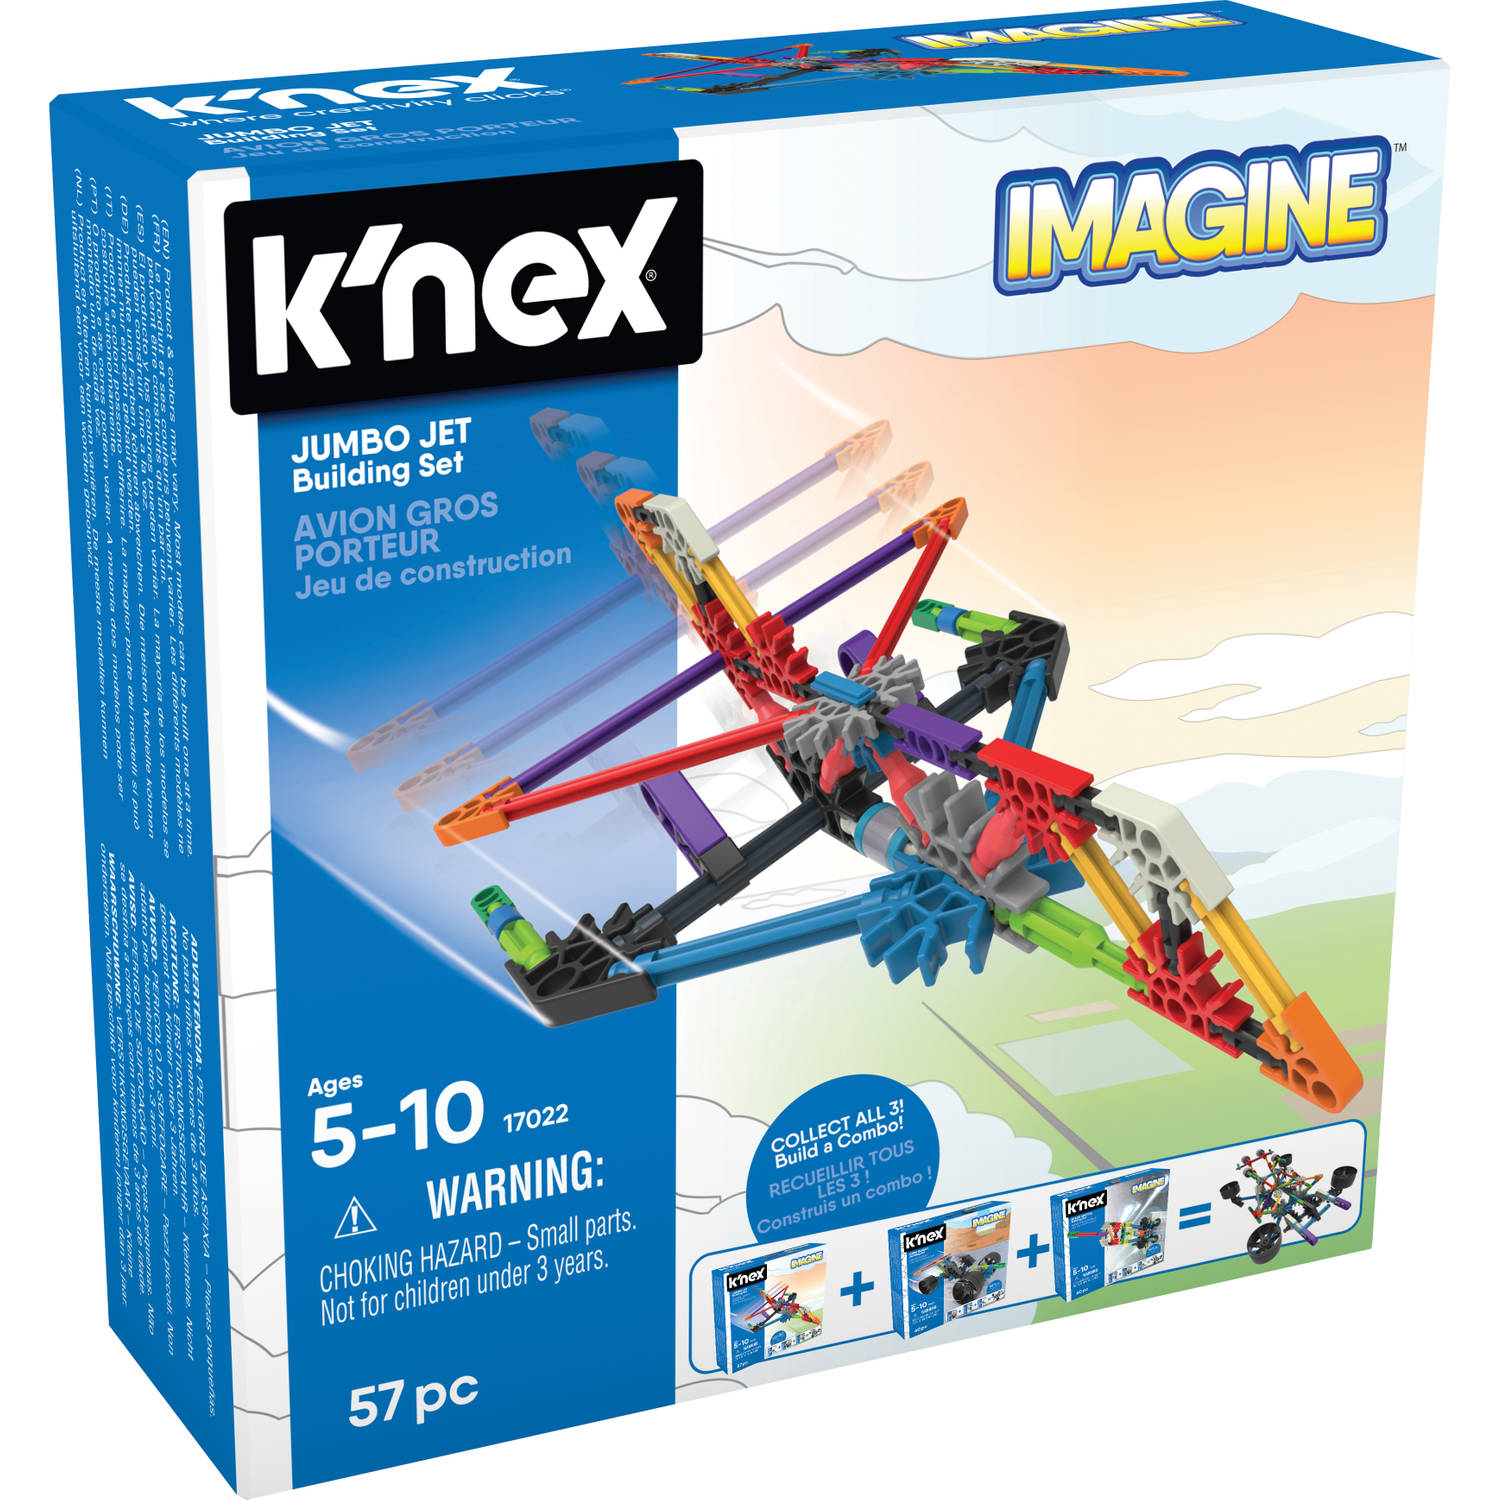 knex-imagine-jumbo-jet-building-set